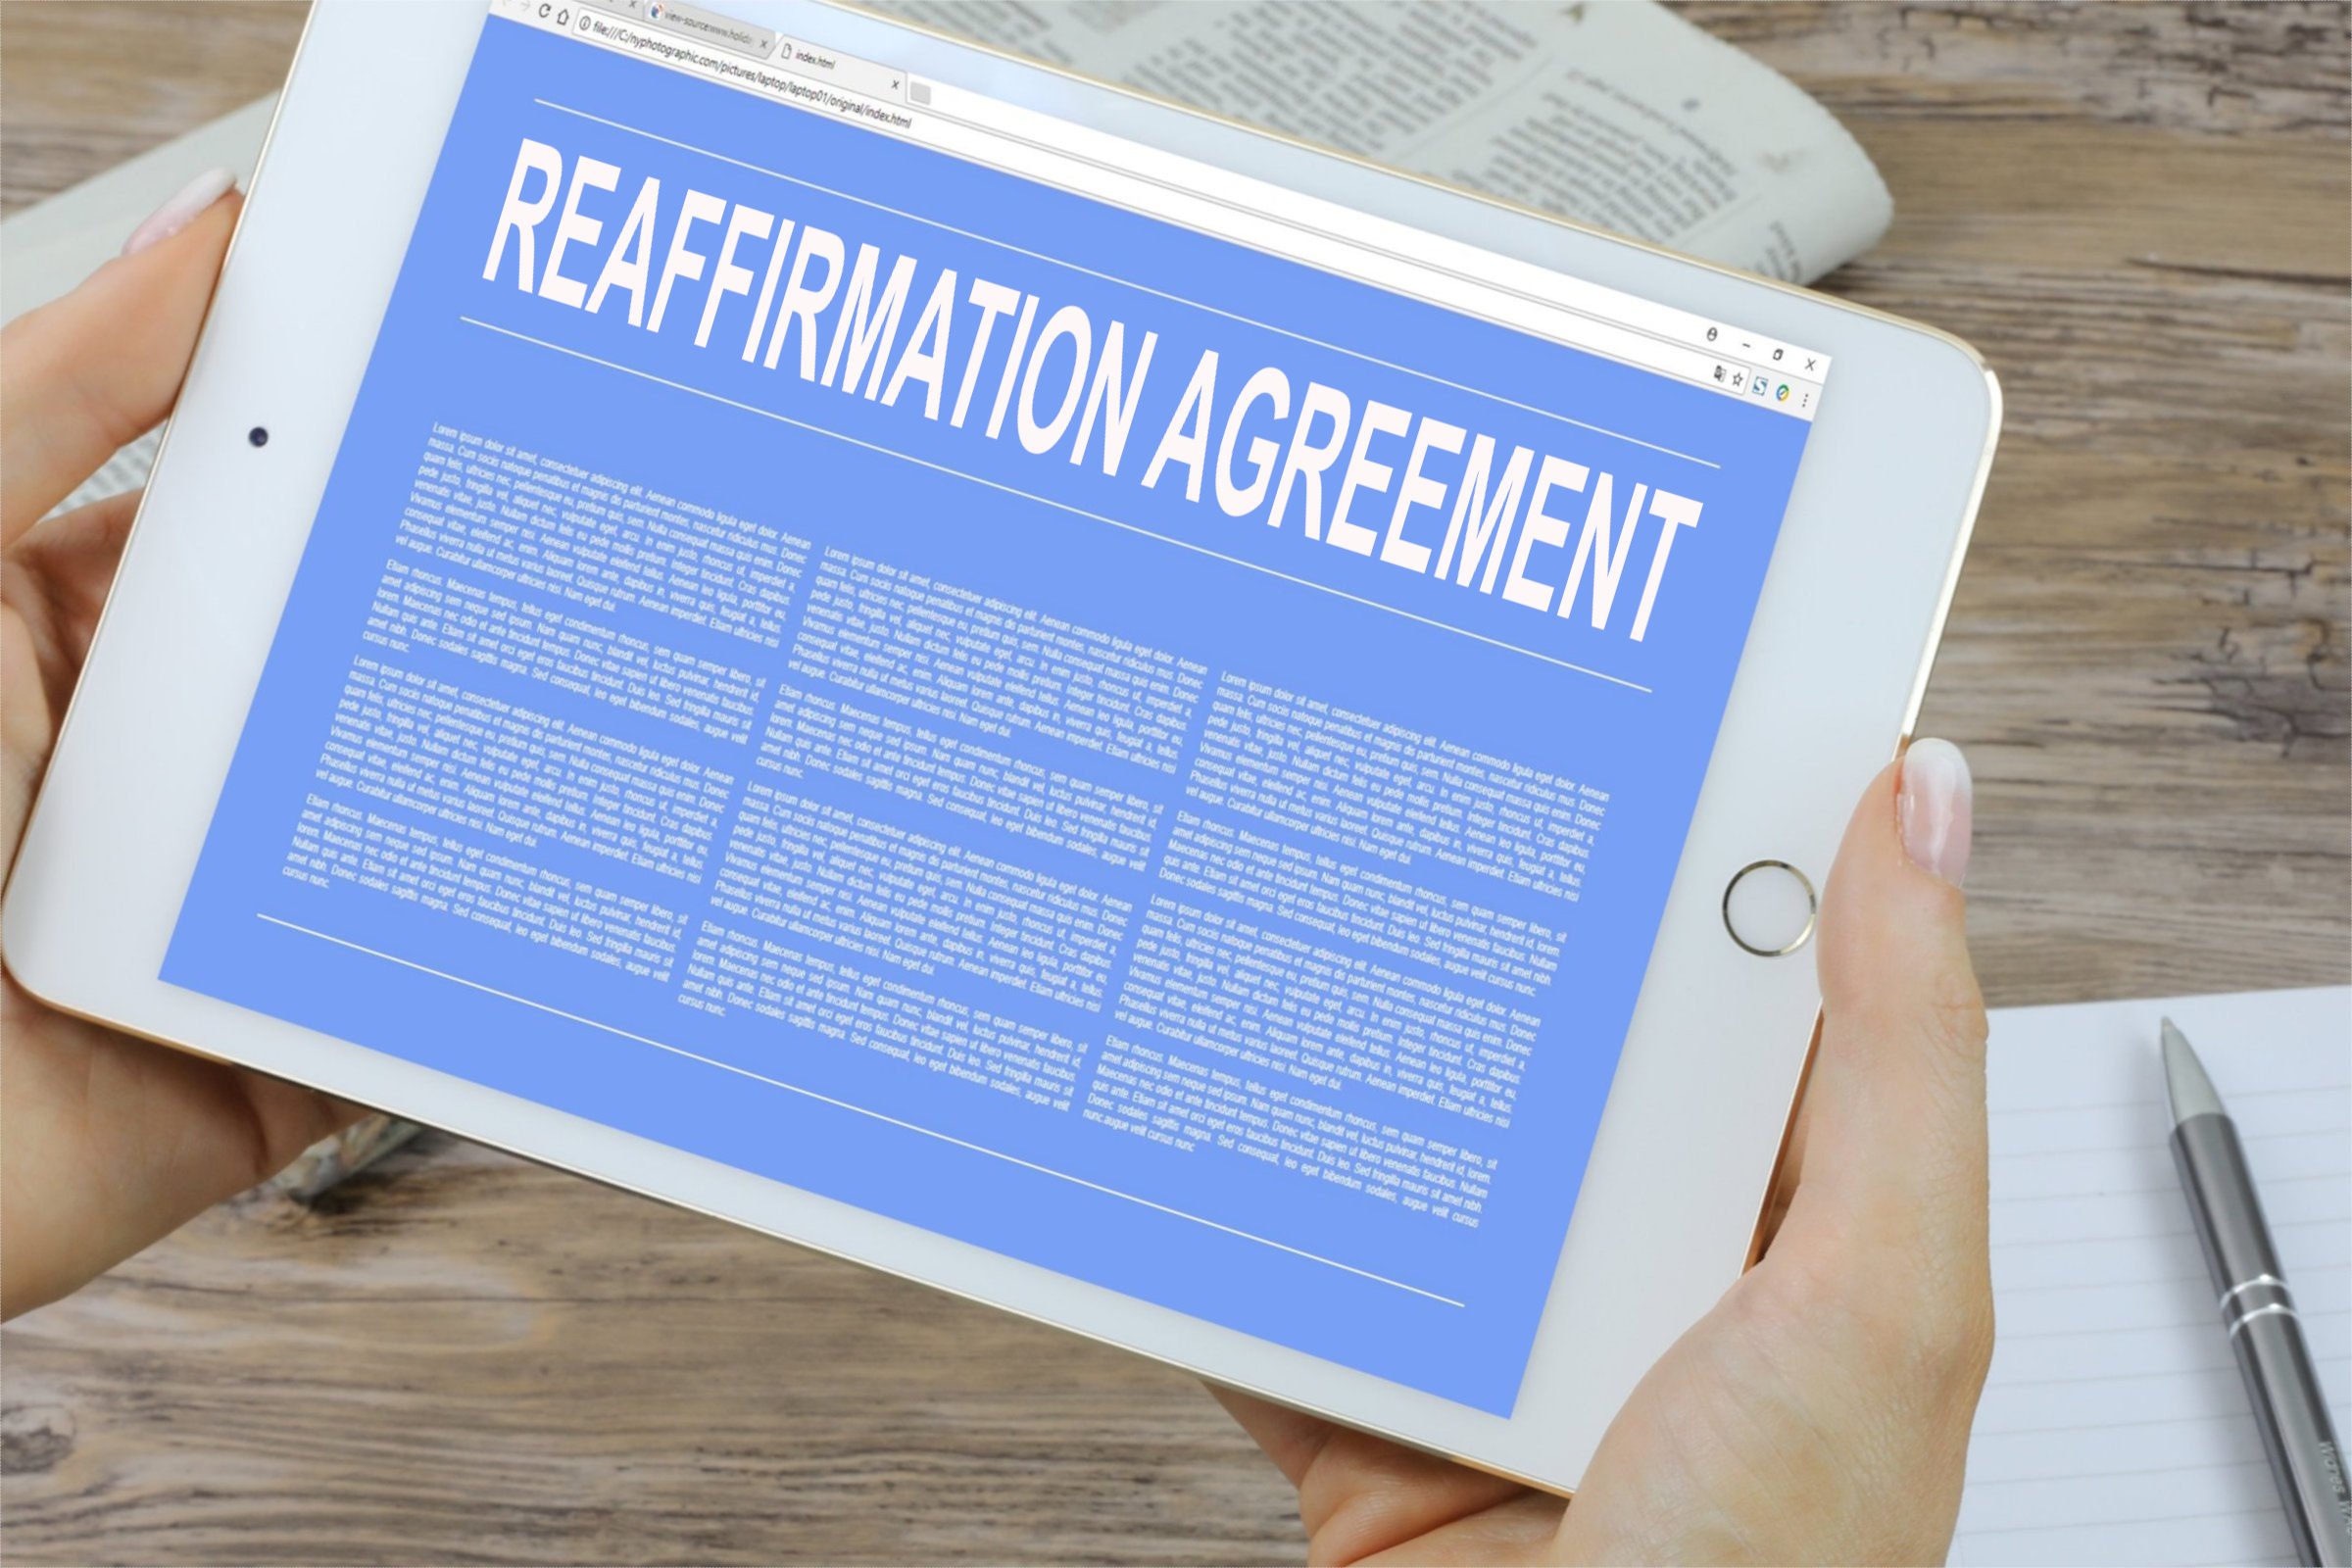 reaffirmation agreement